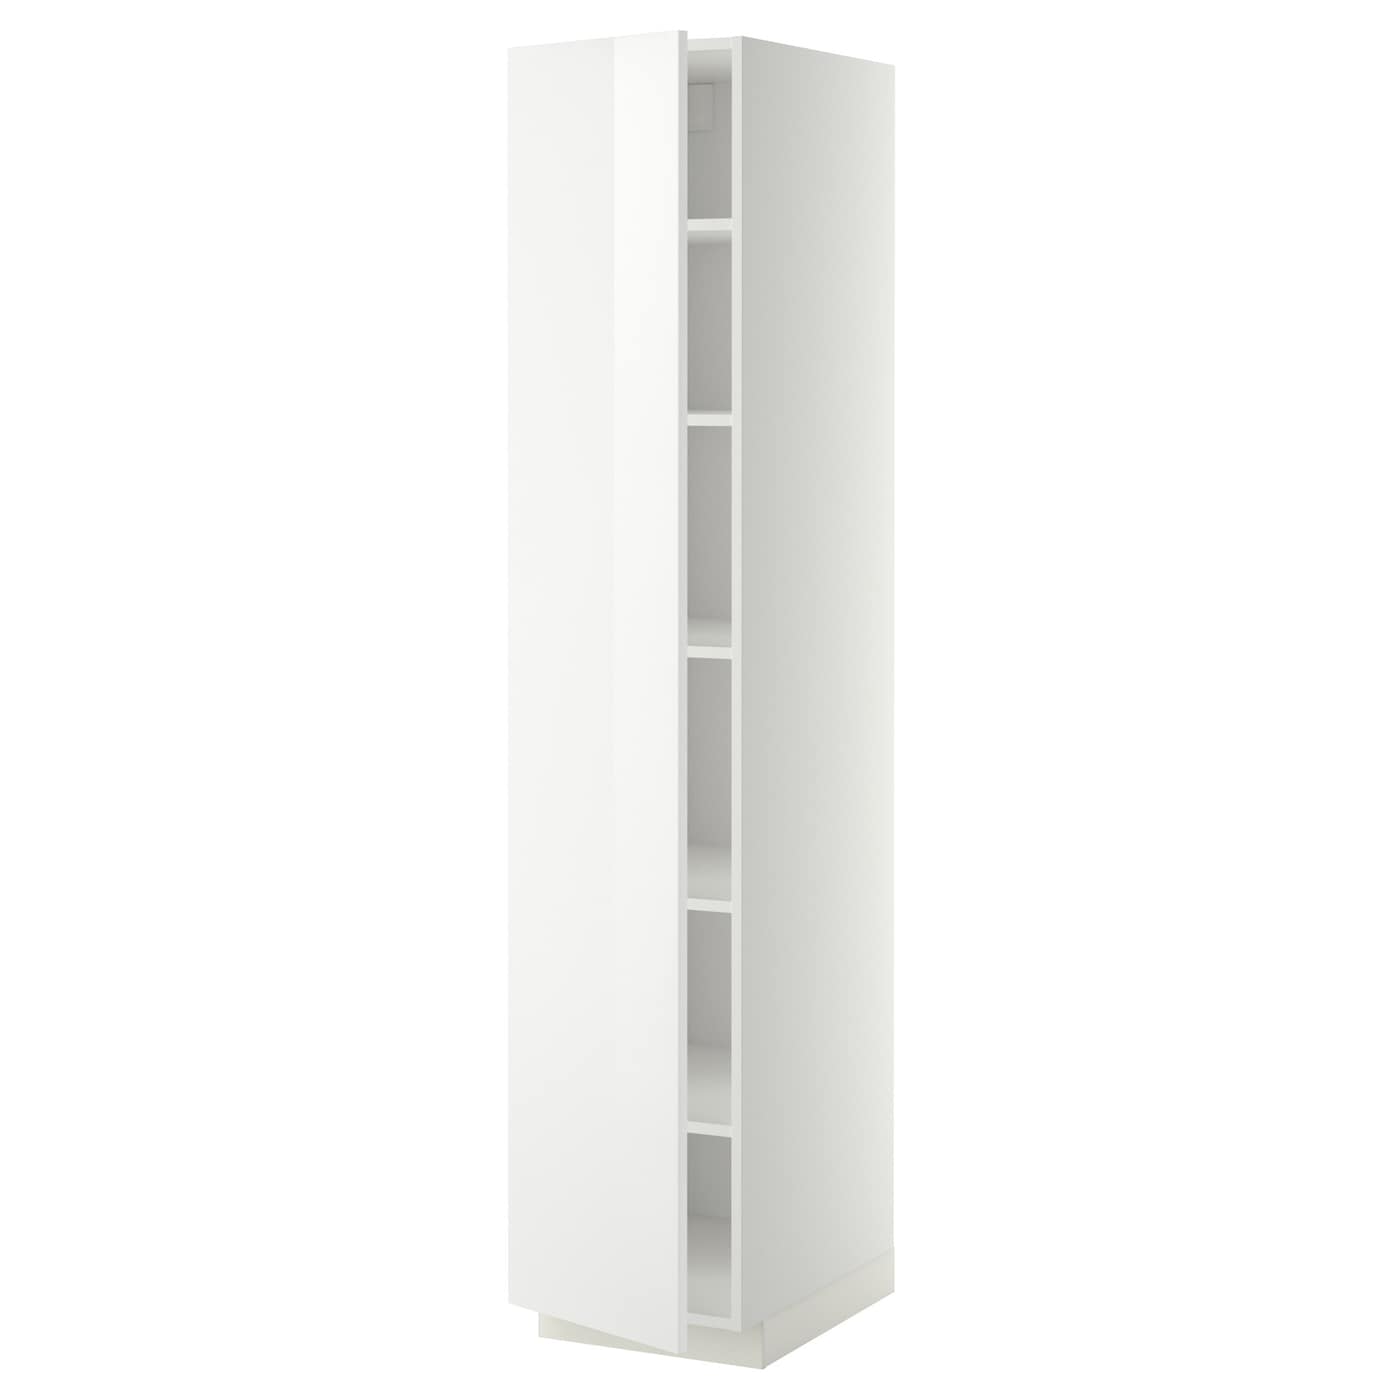 Высокий кухонный шкаф с полками - IKEA METOD/МЕТОД ИКЕА, 200х60х40 см, белый глянцевый